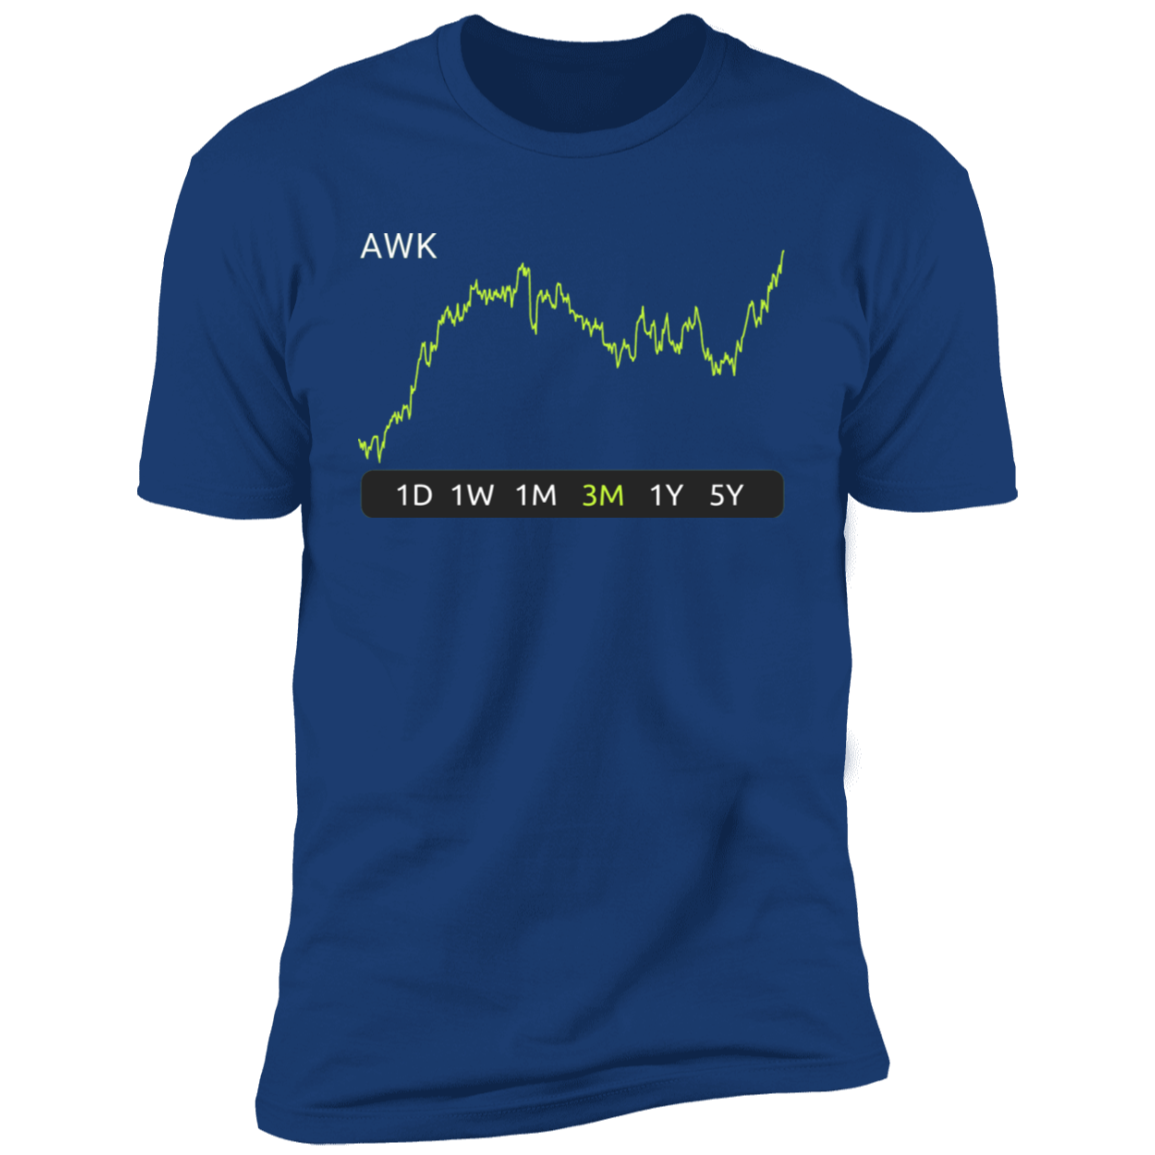 AWK Stock 3m Premium T-Shirt